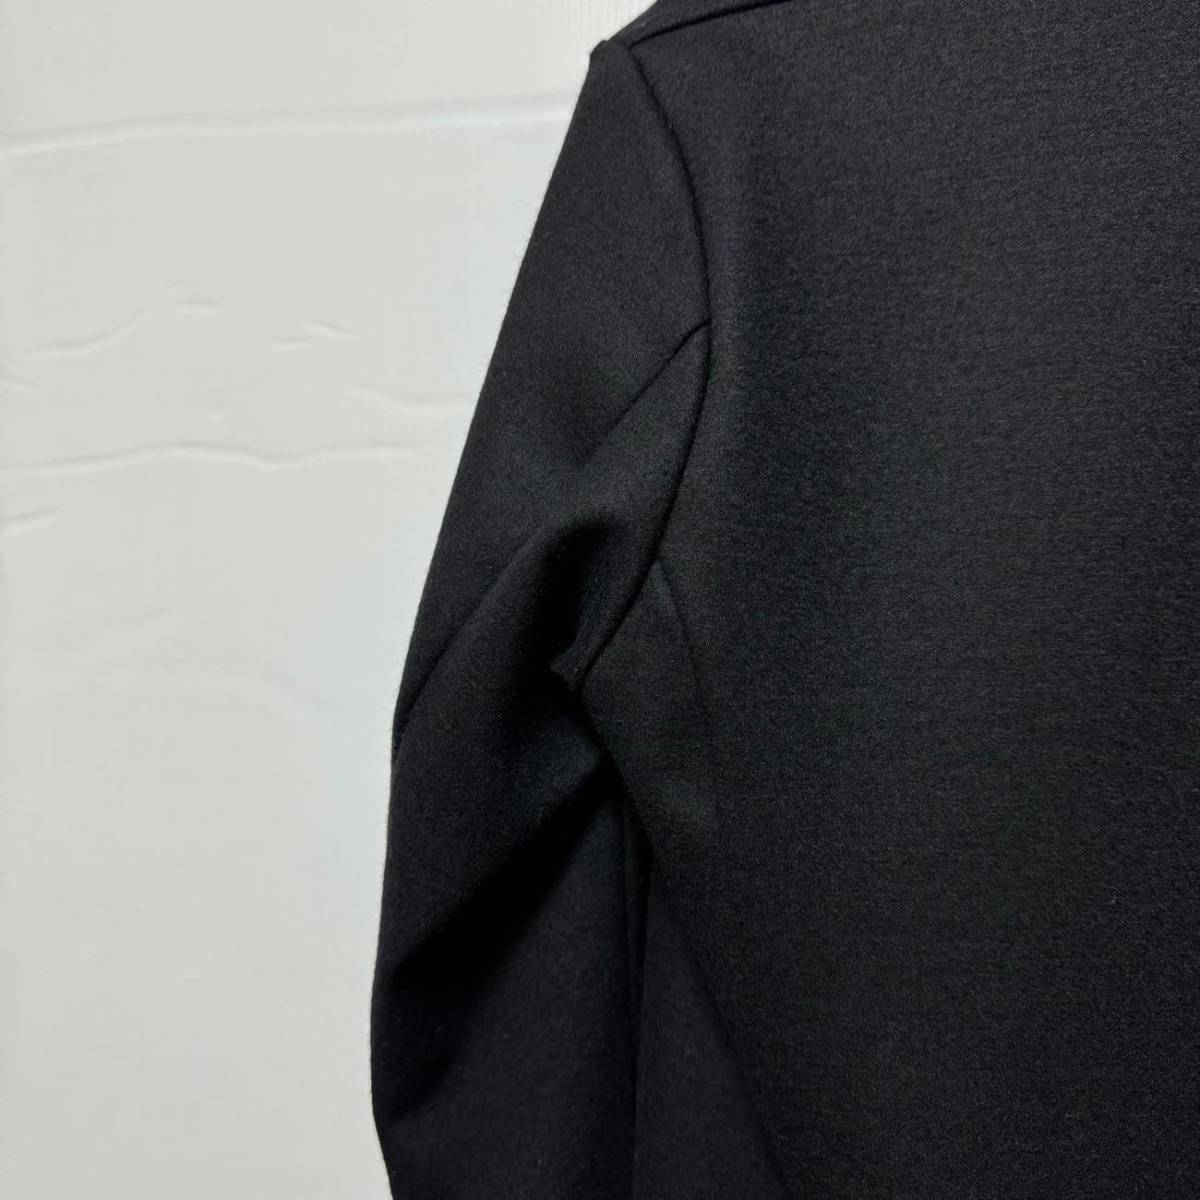  superior article kazyuki bear gai Attachment wool flannel coat regular price 36,300 jpy 1 postage 520 jpy ~ KAZUYUKI KUMAGAI ATTACHMENT cardigan black 